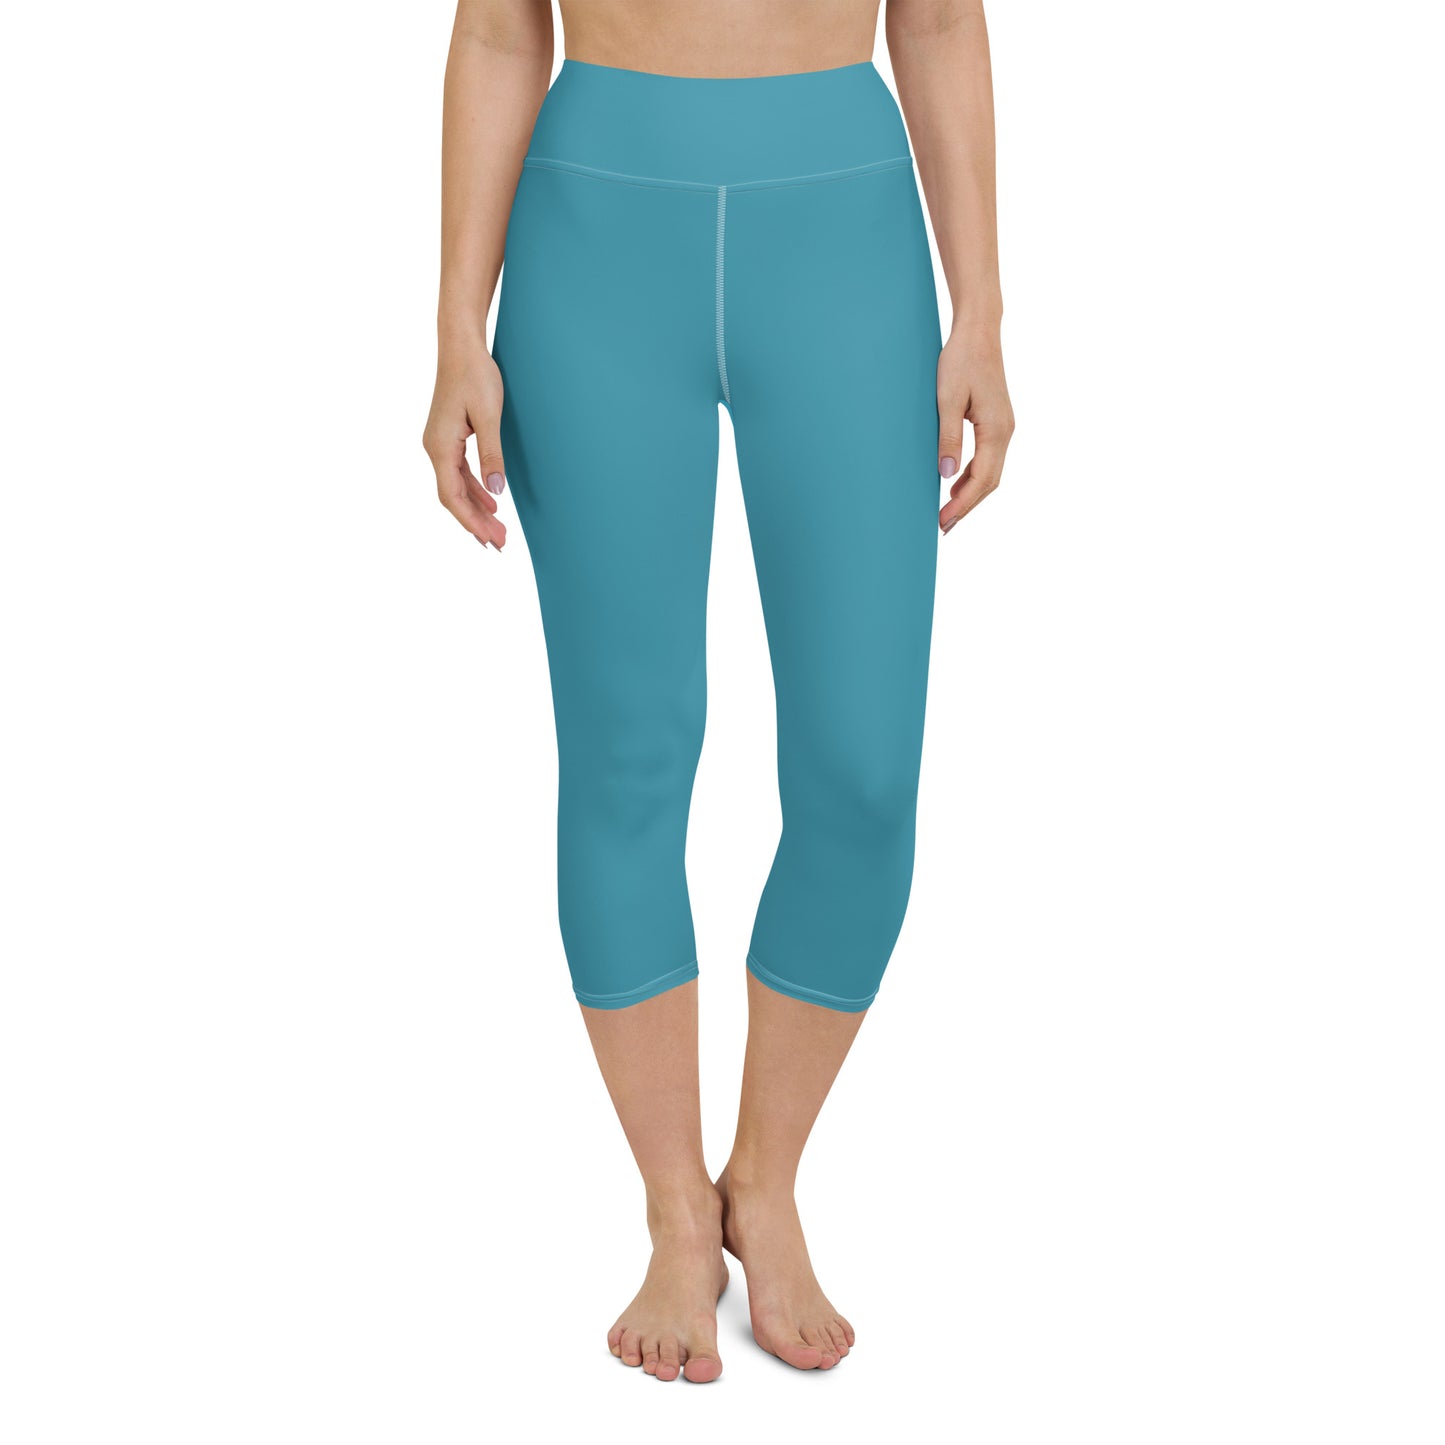 Schnucki Solid Color Capri High Waist Yoga Leggings / Pants with Inside Pocket